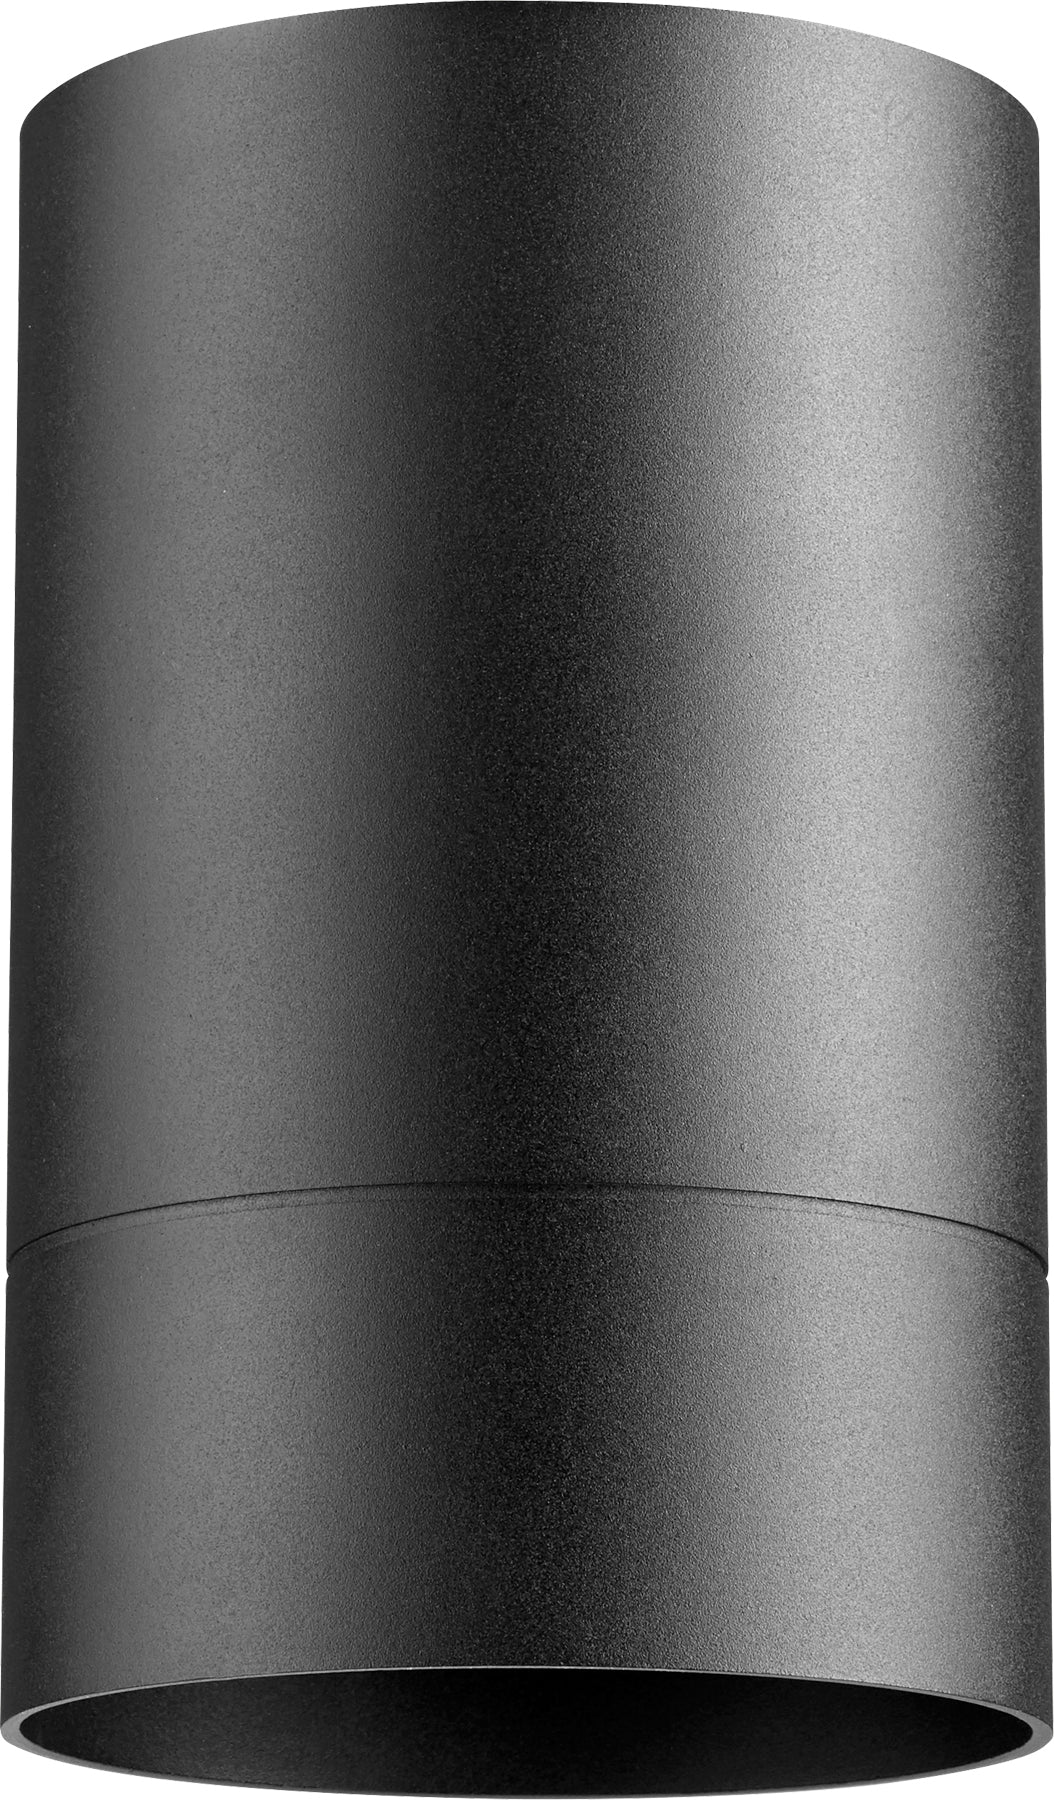 Quorum Cylinder 320-69 Ceiling Mount - Textured Black